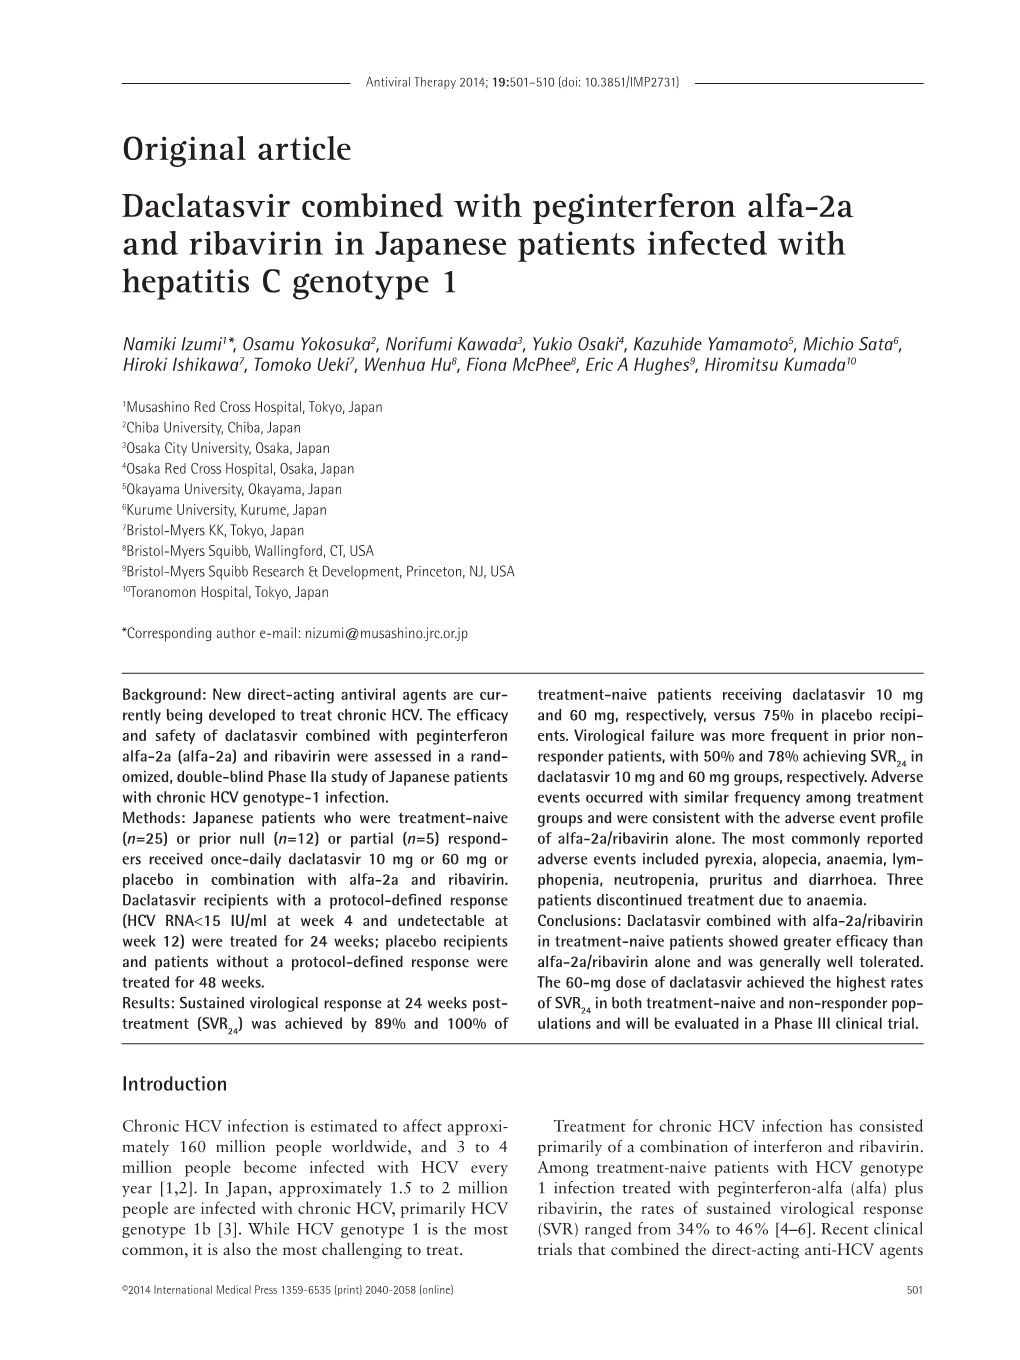 Original Article Daclatasvir Combined with Peginterferon Alfa-2A and Ribavirin in Japanese Patients Infected with Hepatitis C Genotype 1